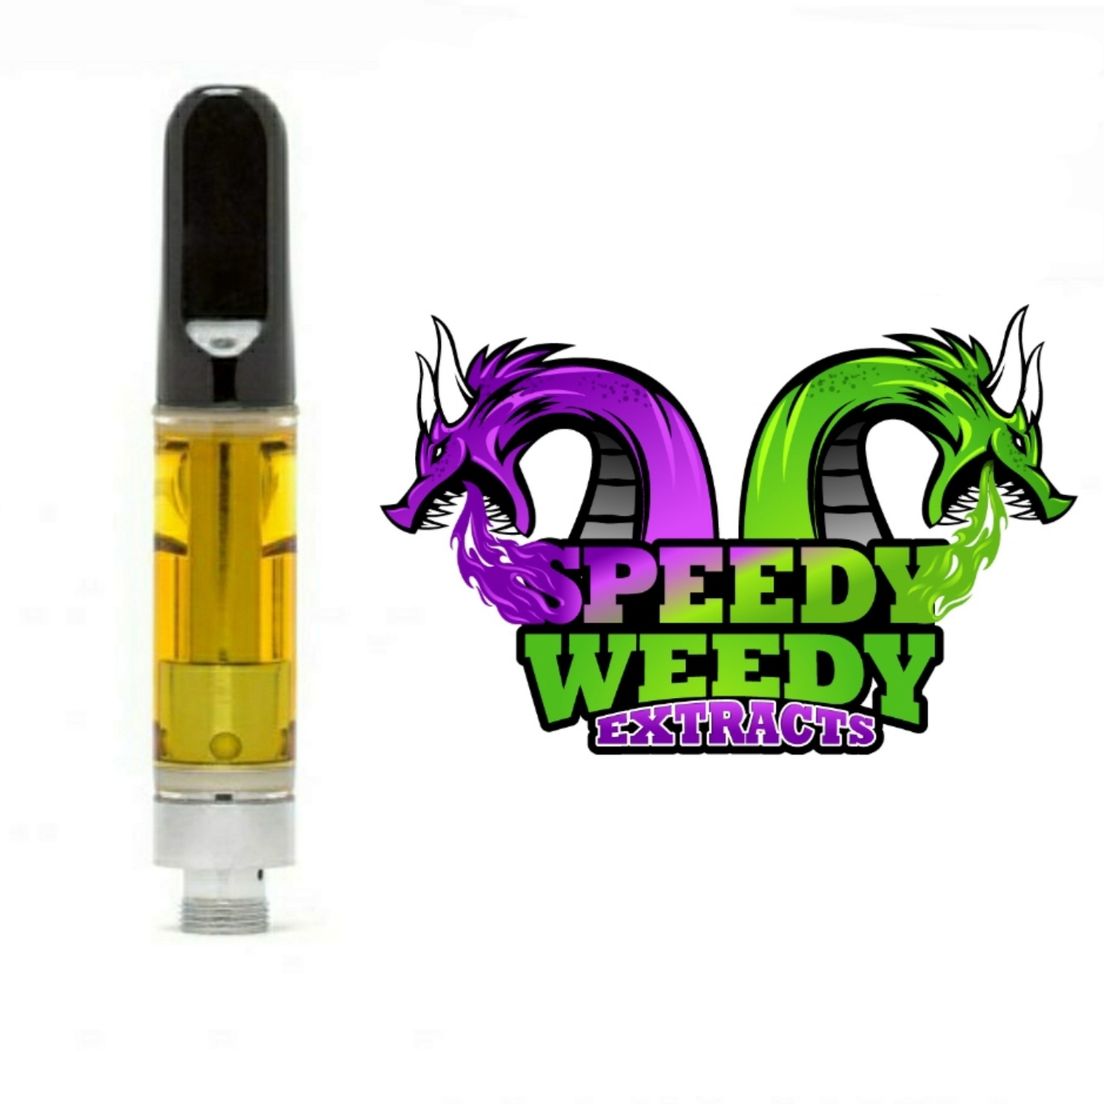 1. Speedy Weedy 1g THC Vape Cartridge - Northern Lights (I) 3/$60